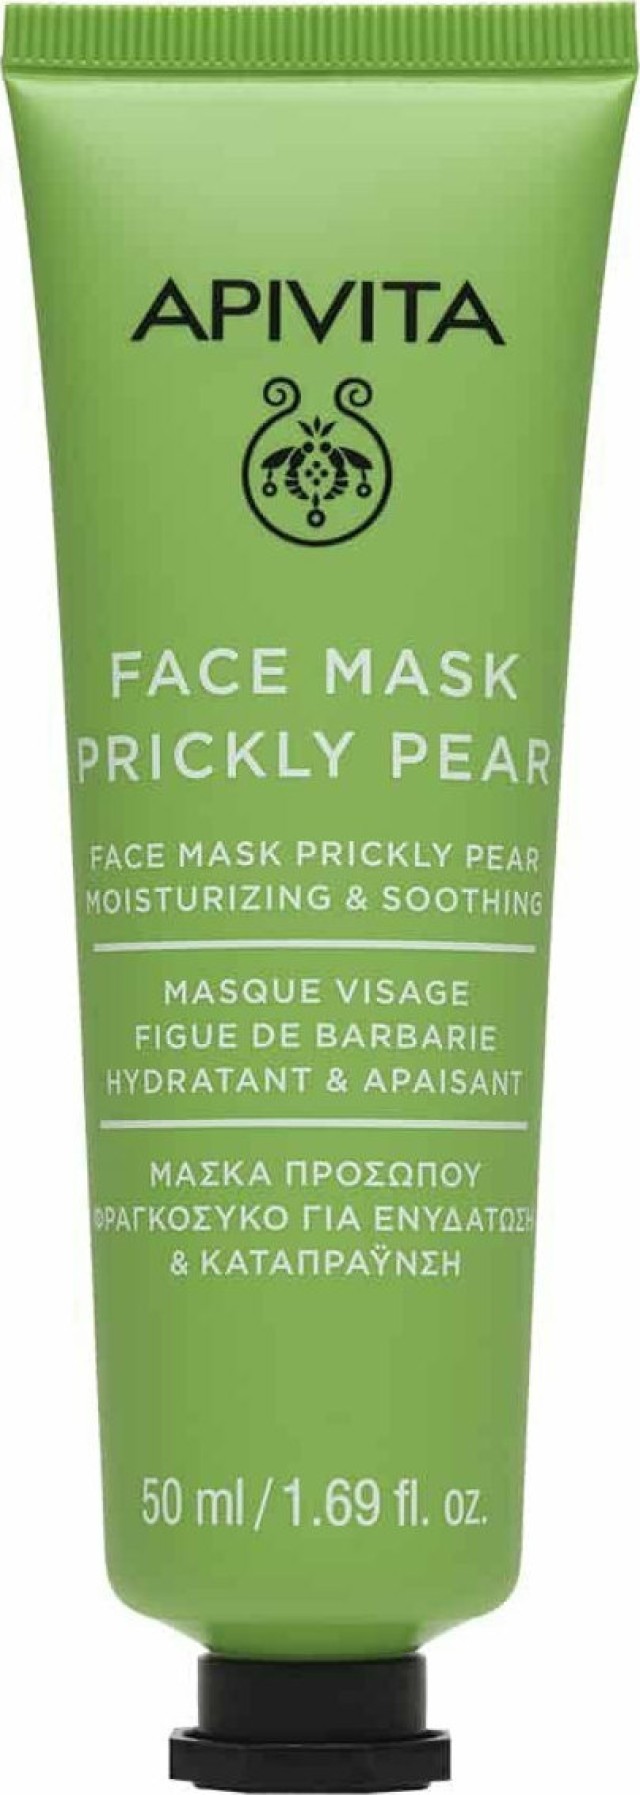 Apivita Face Mask Prickly Pear Μάσκα Προσώπου Φραγκόσυκο για Ενυδάτωση - Καταπράυνση 50ml